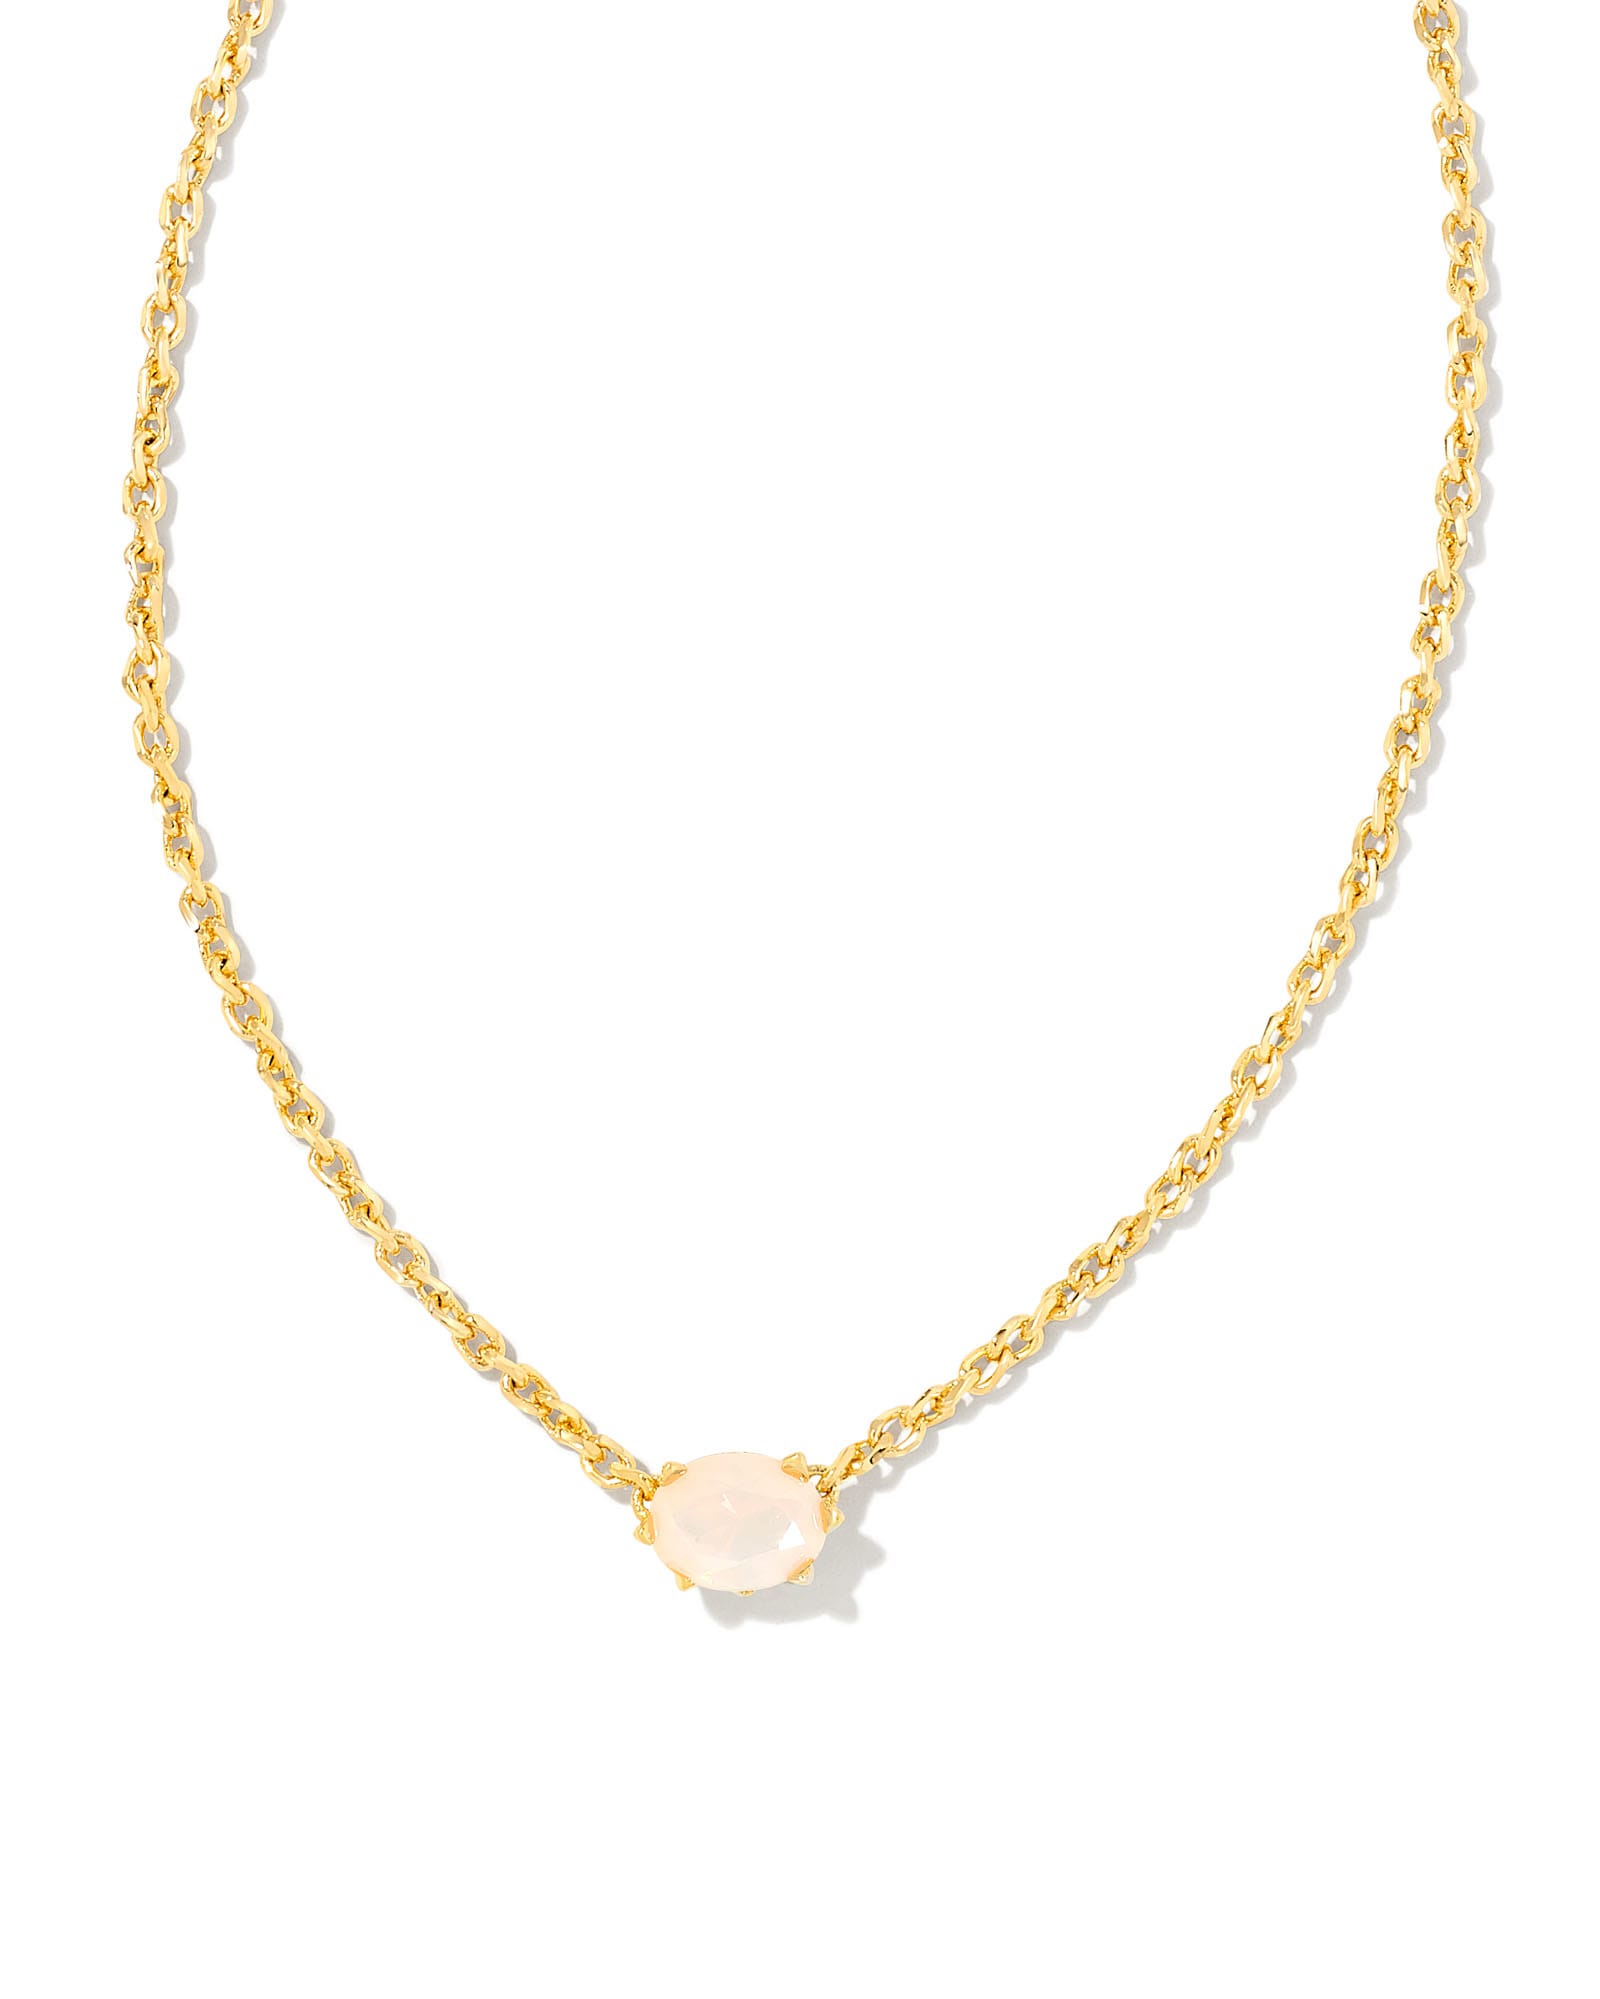 Kendra Scott Cailin Gold Pendant Necklace in Champagne Opal Crystal | Nanogem 277